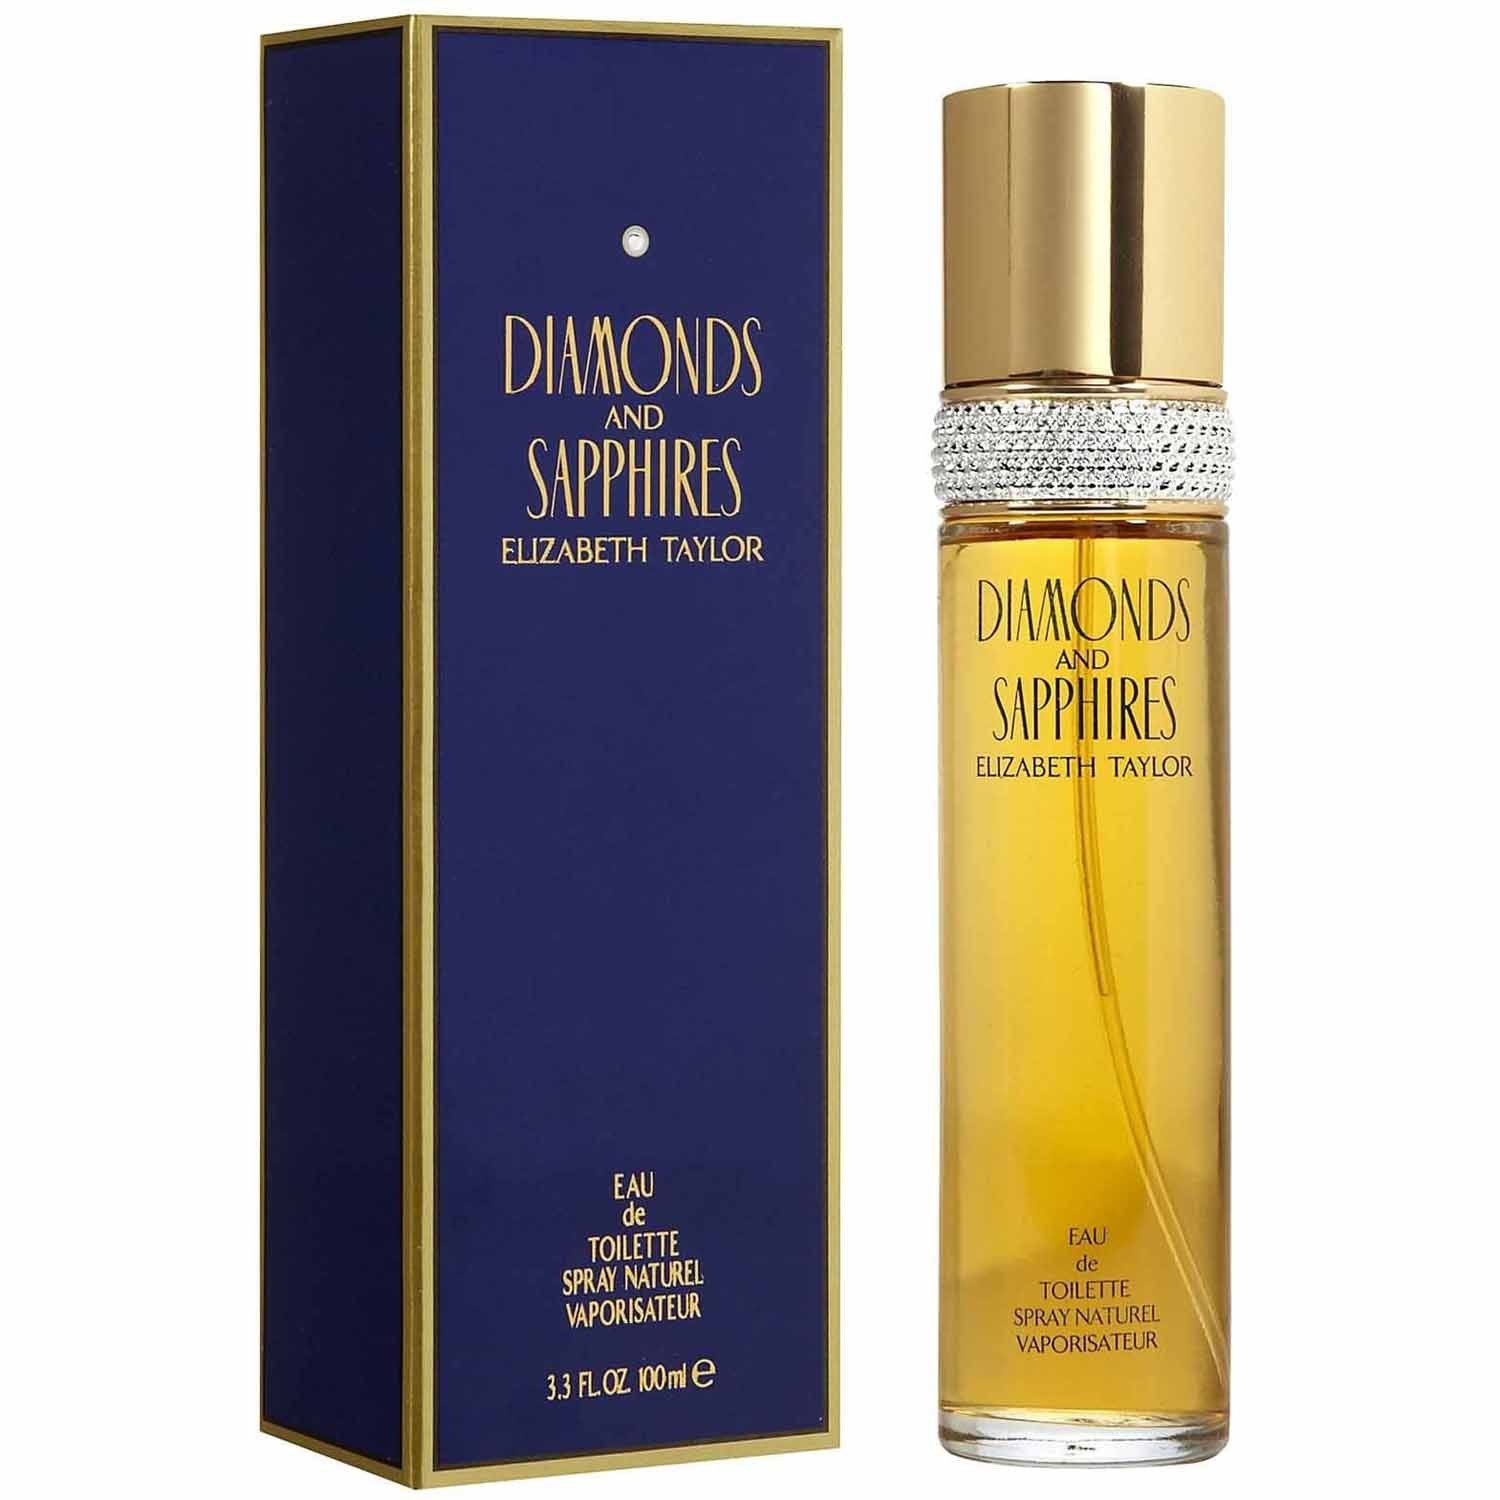 Diamonds And Sapphires 100 ml Edt Spray de Elizabeth Taylor